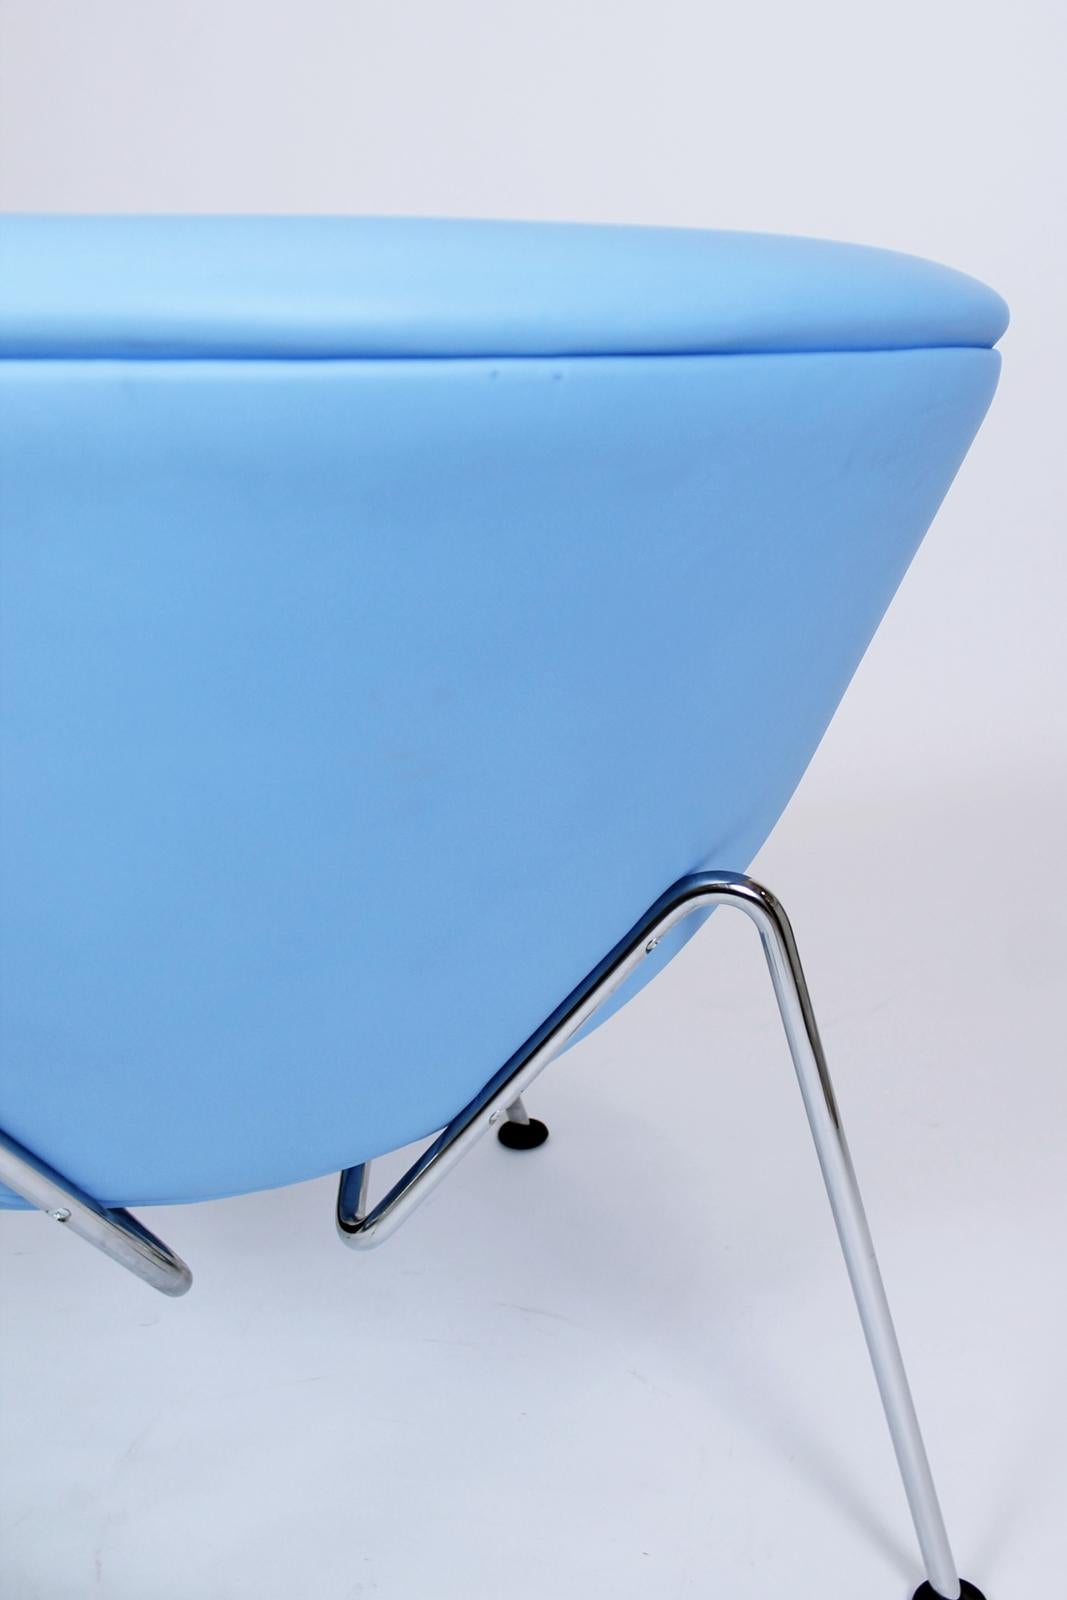 Pierre Paulin for Artifort Original Baby Blue Leather Orange Slice Chair 3